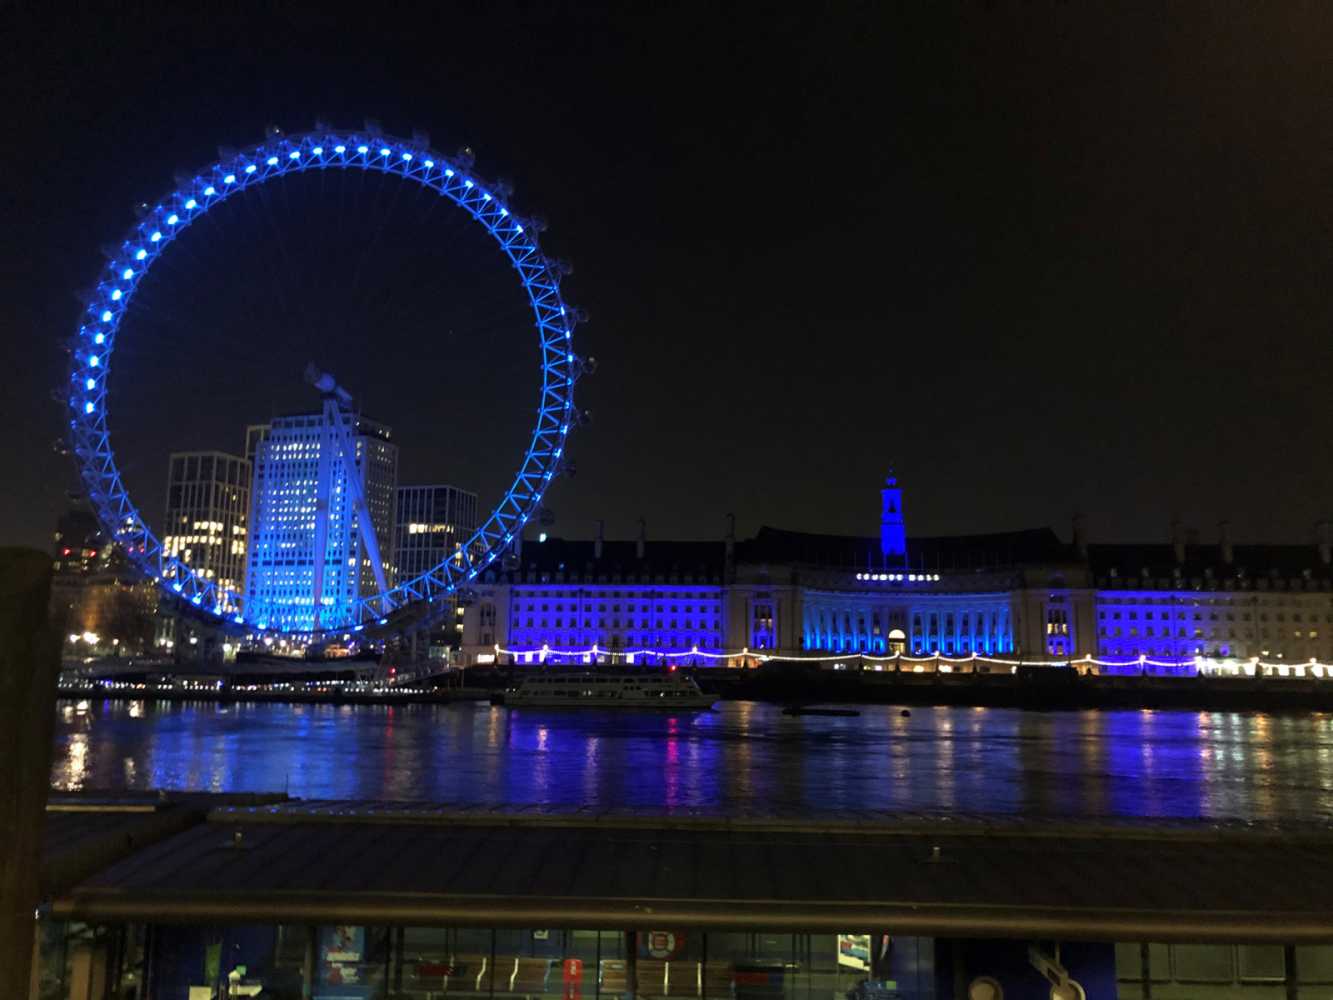 Landmarks across the world have taken part by illuminating blue on Thursday nights